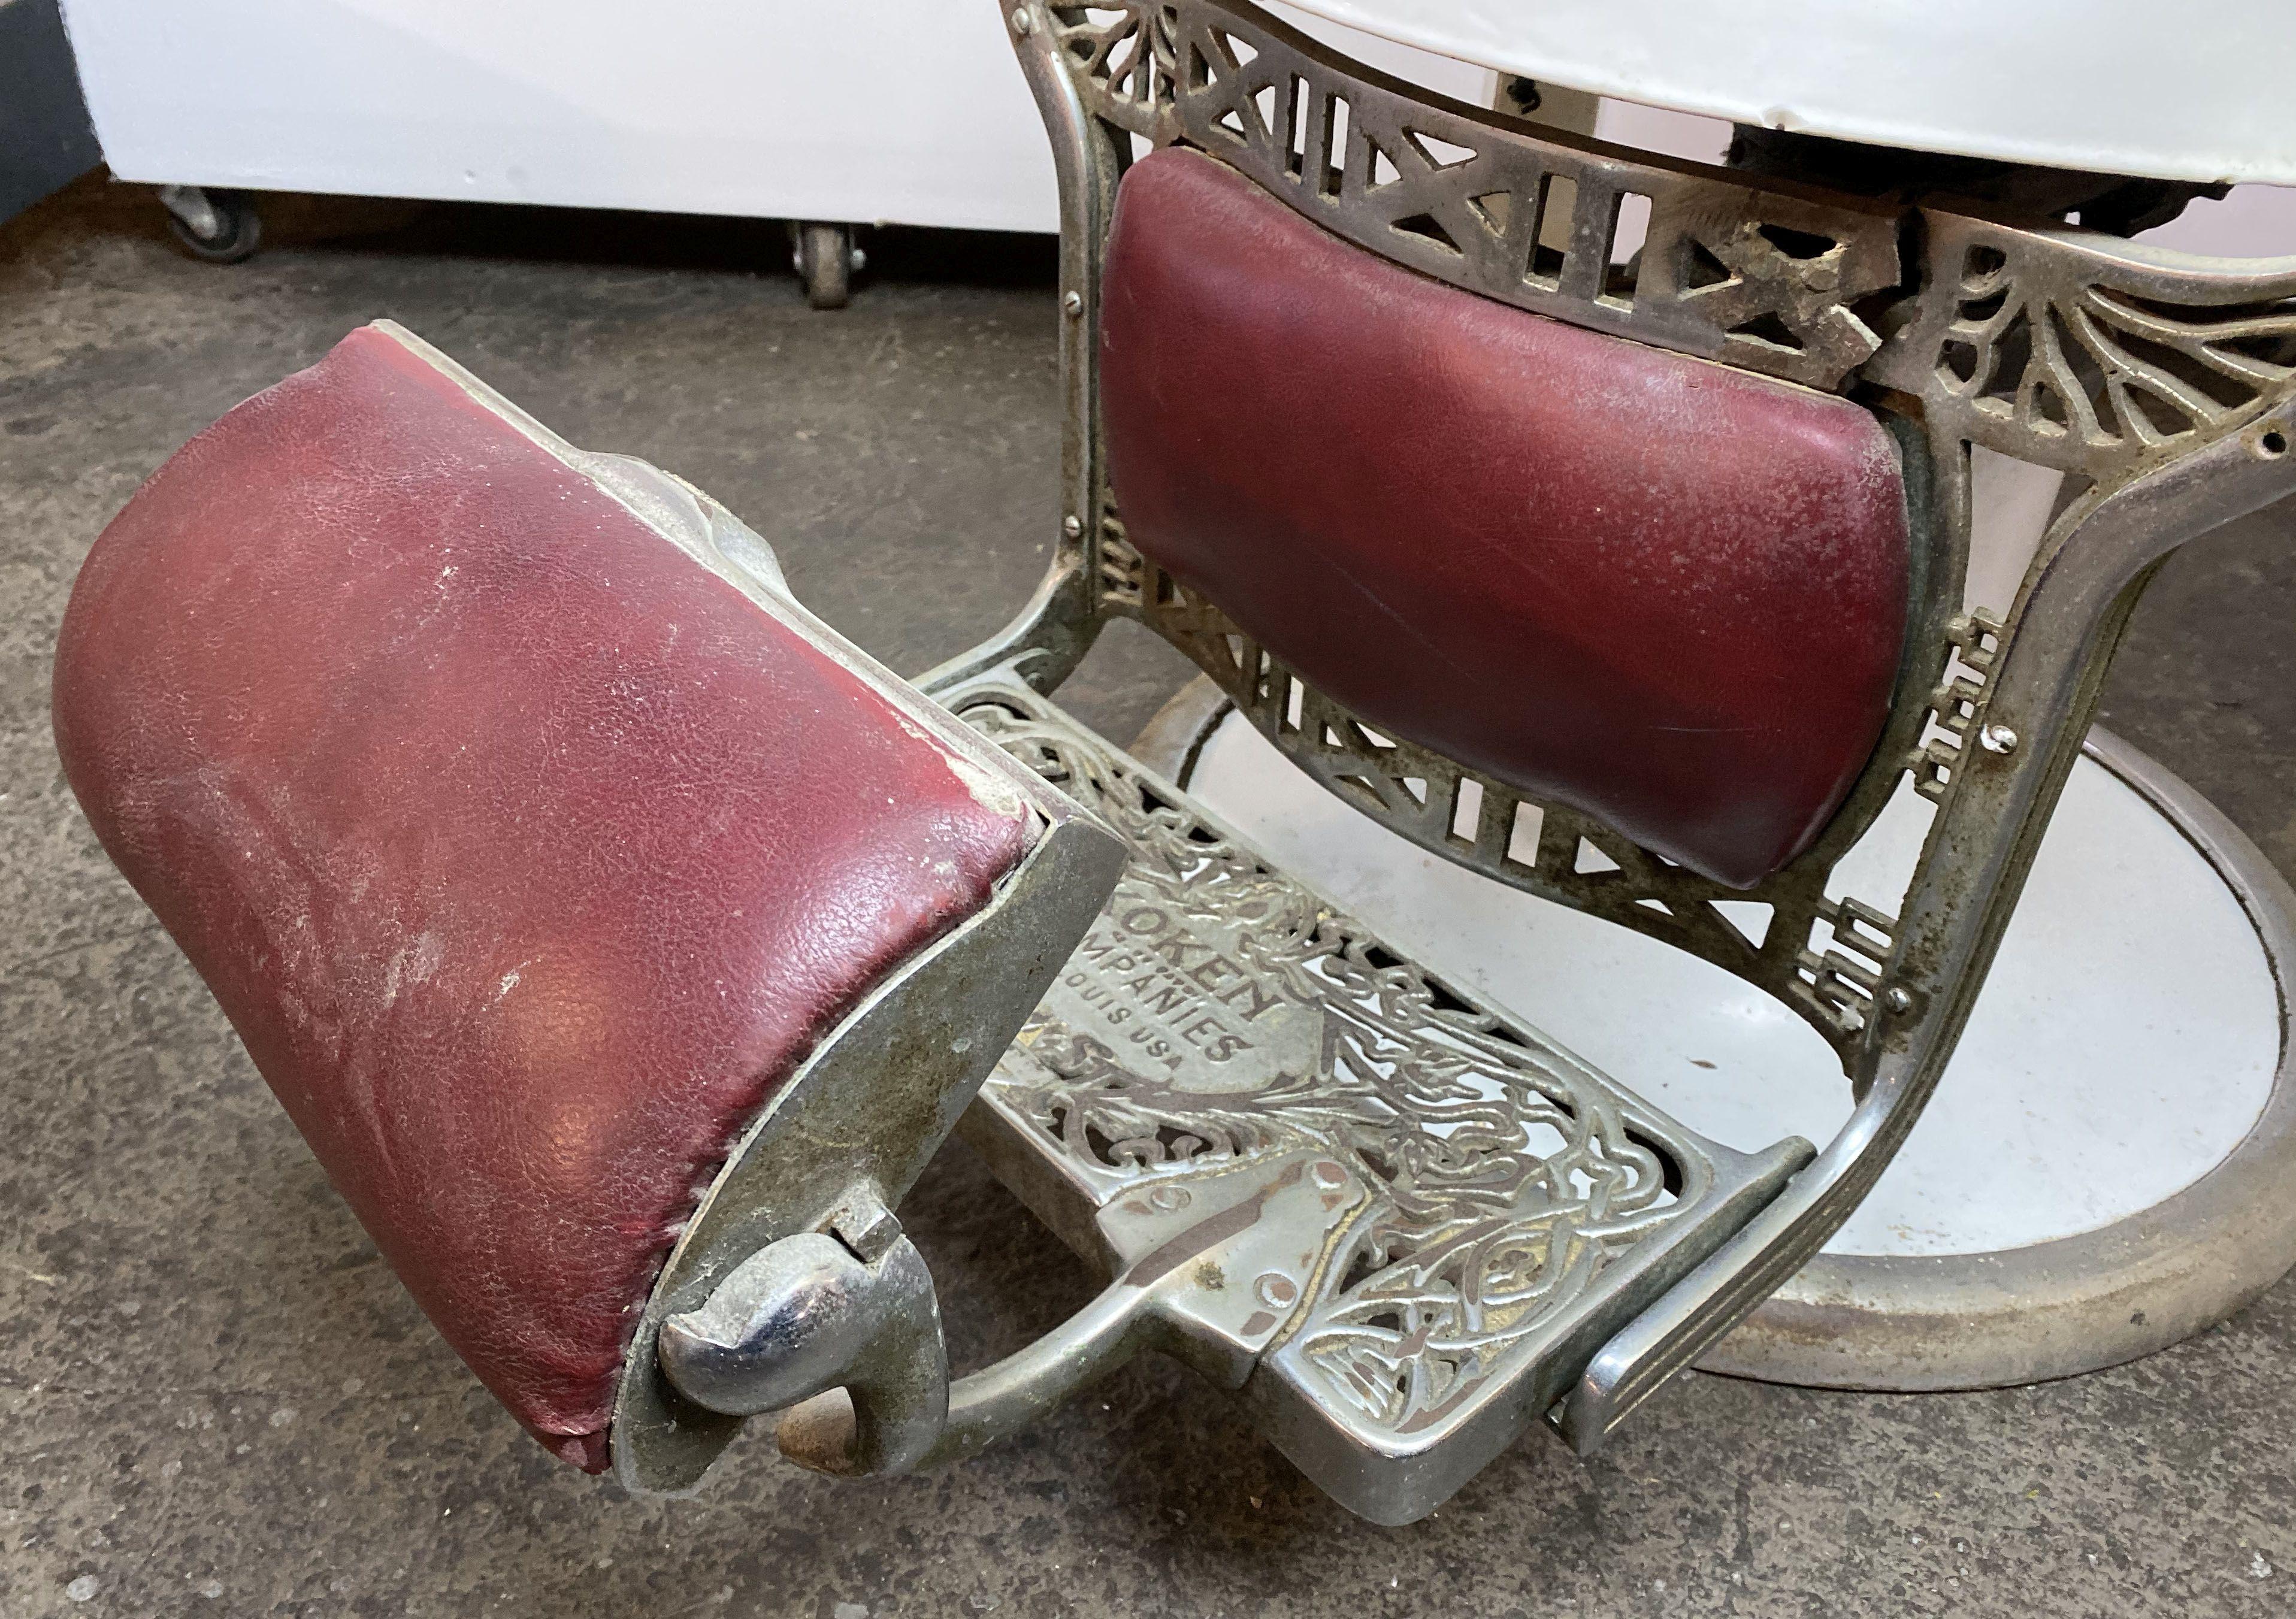 Vintage Koken Companies St. Louis USA Barber Chair